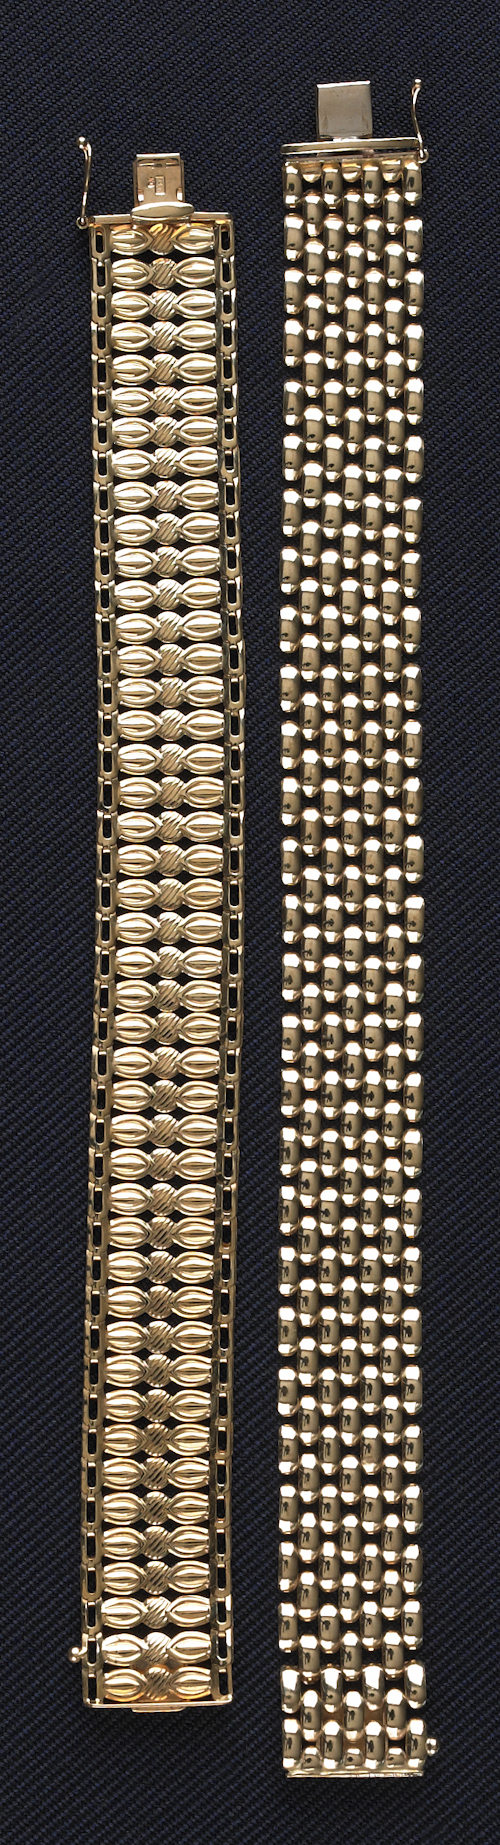 Two 14K yellow gold mesh wide bracelets